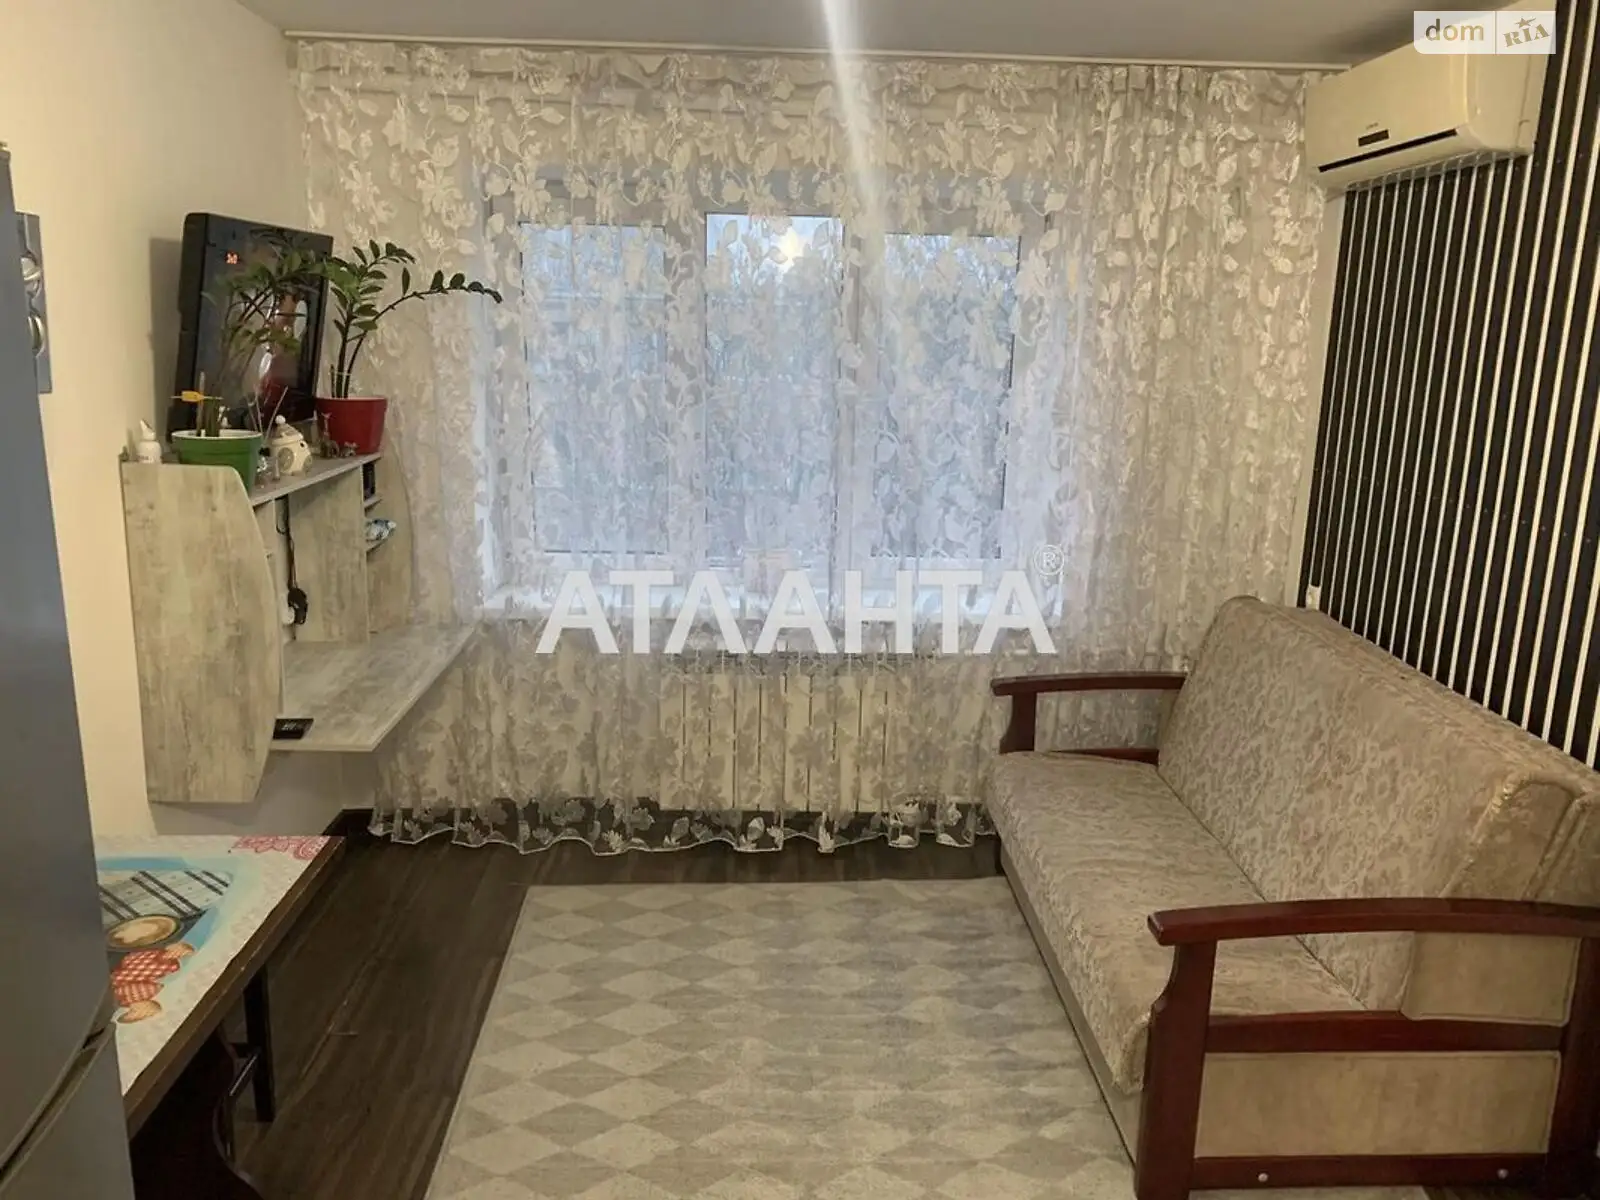 Продается комната 90 кв. м в Одессе, цена: 9600 $ - фото 1